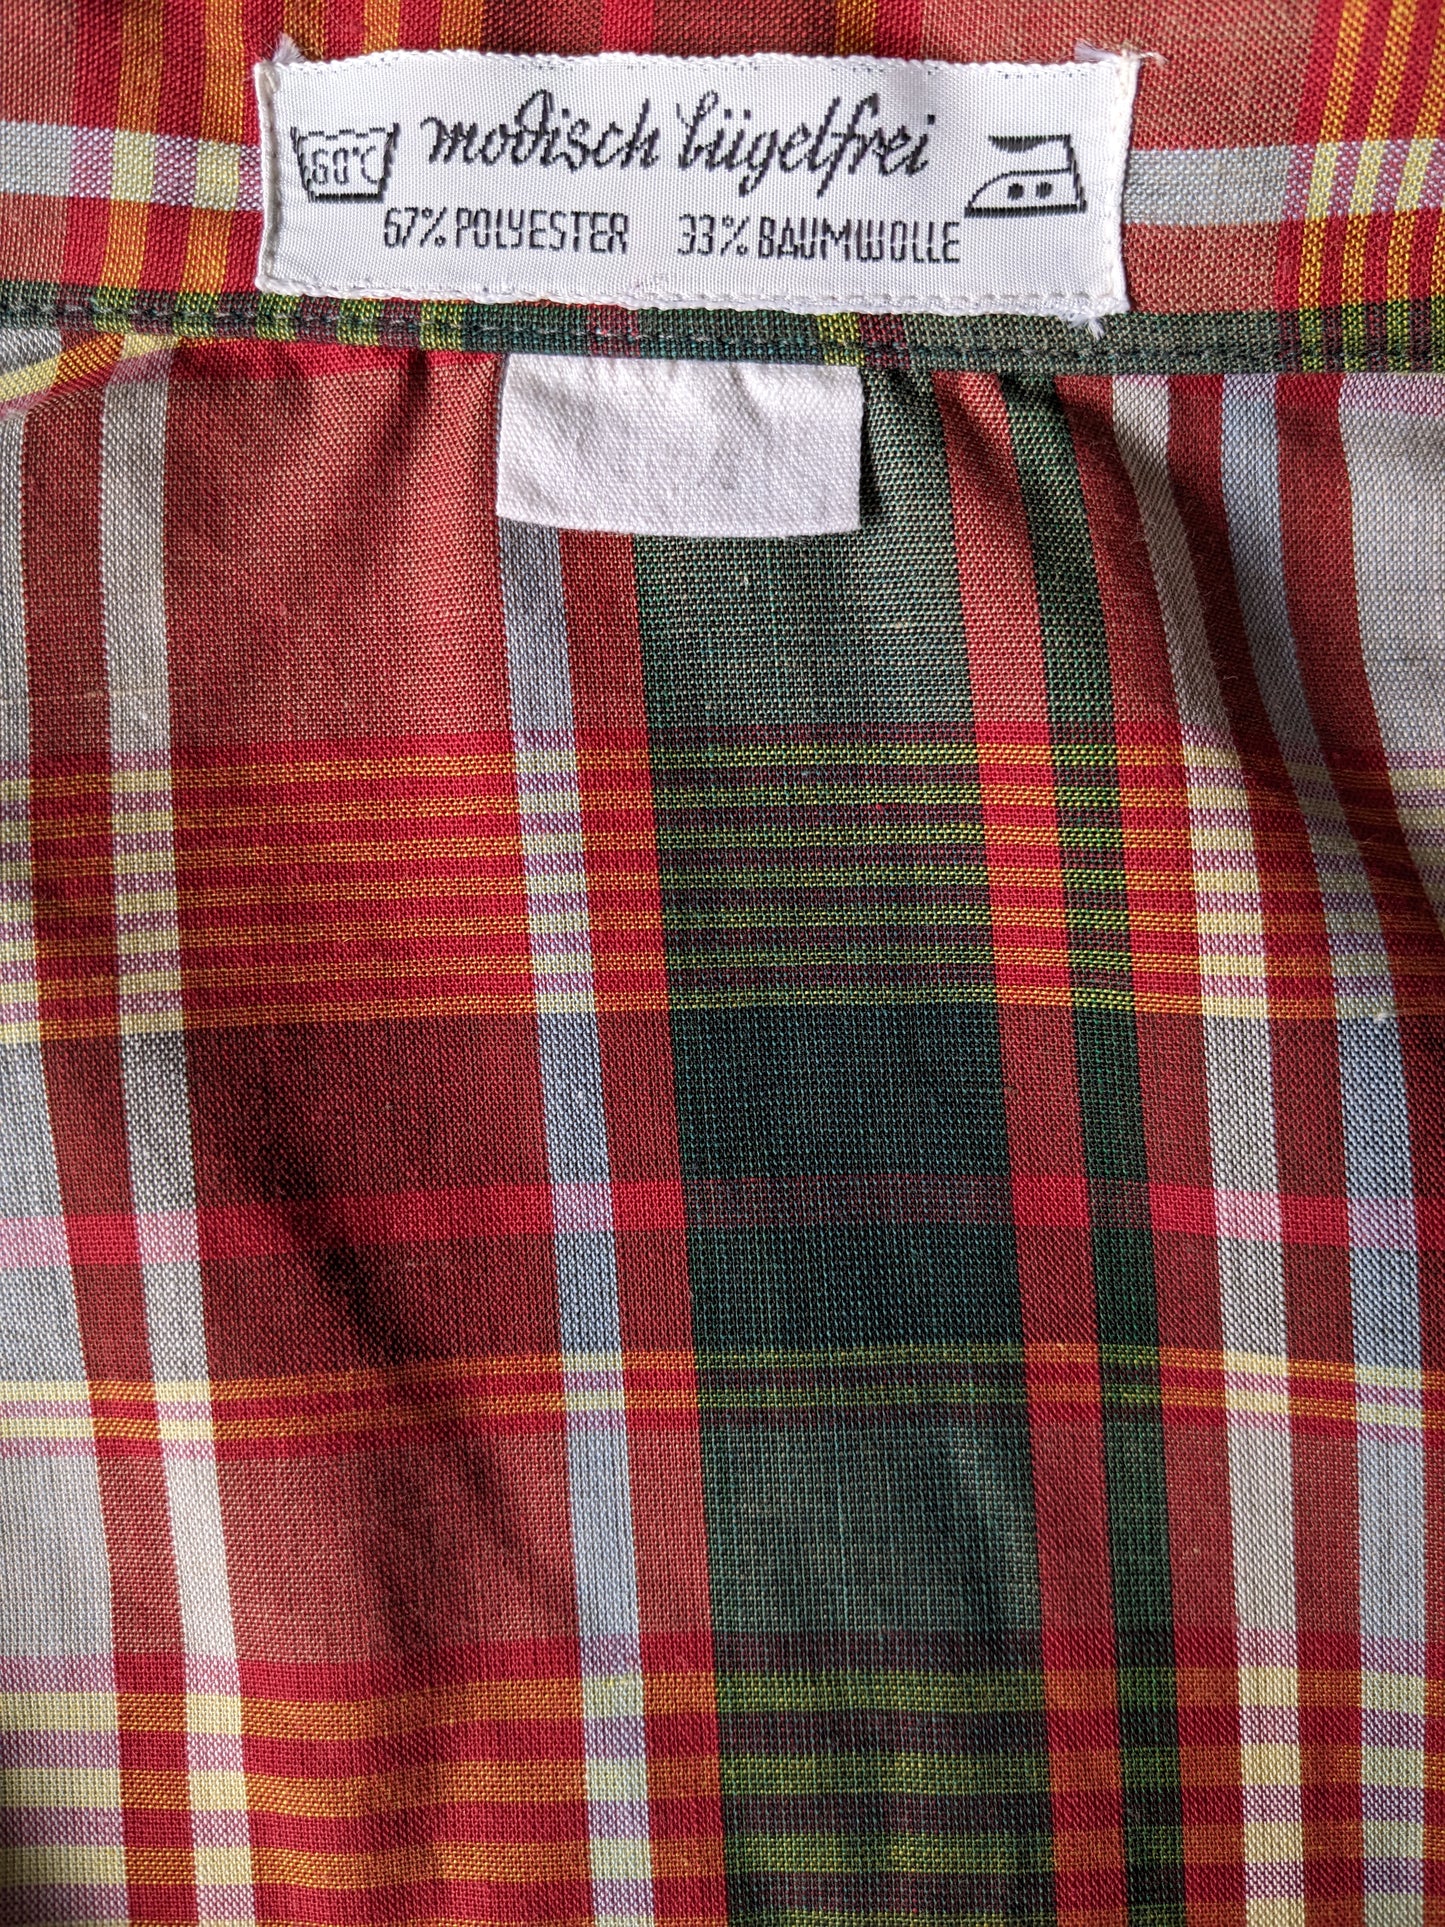 Vintage 70's overhemd met puntkraag. Rood Groen Geel geruit. Maat XL.